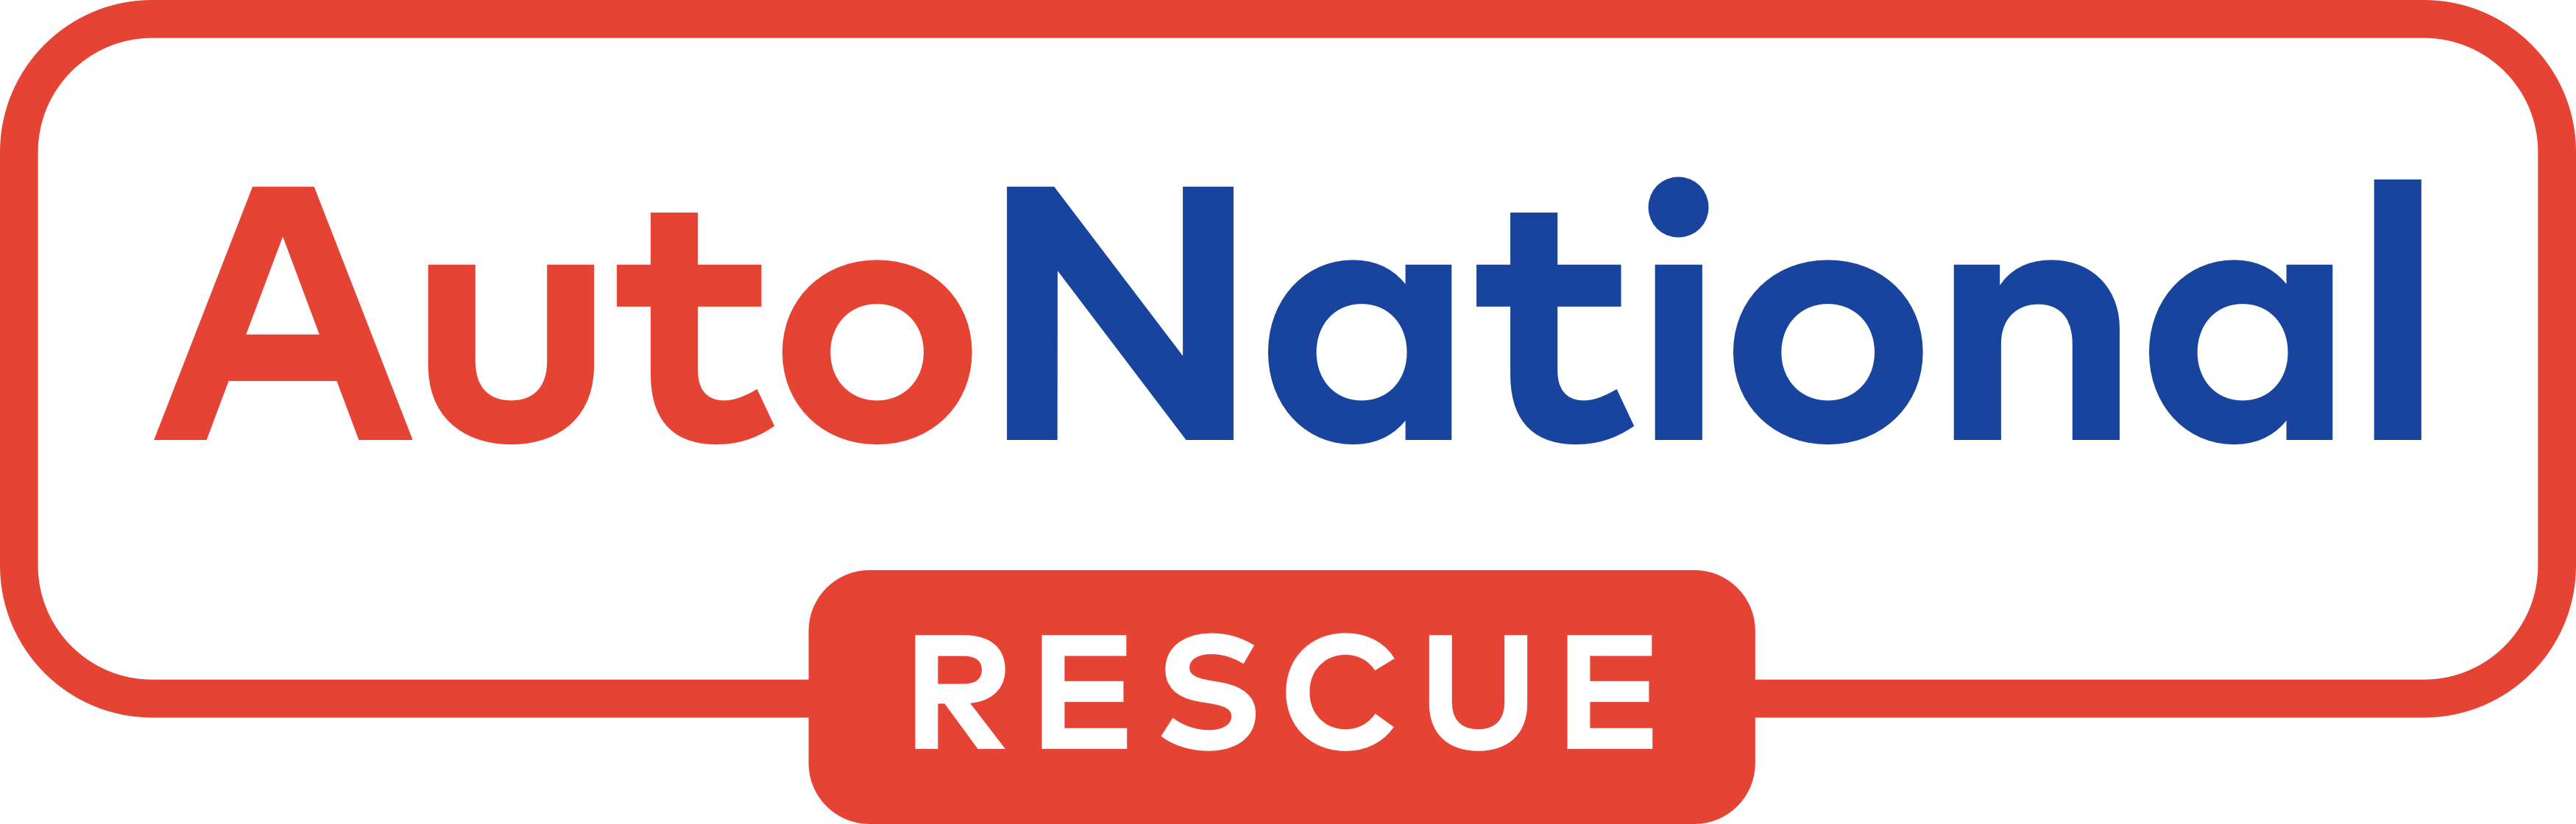 Autonational Rescue – Vehicle Based Breakdown Cover